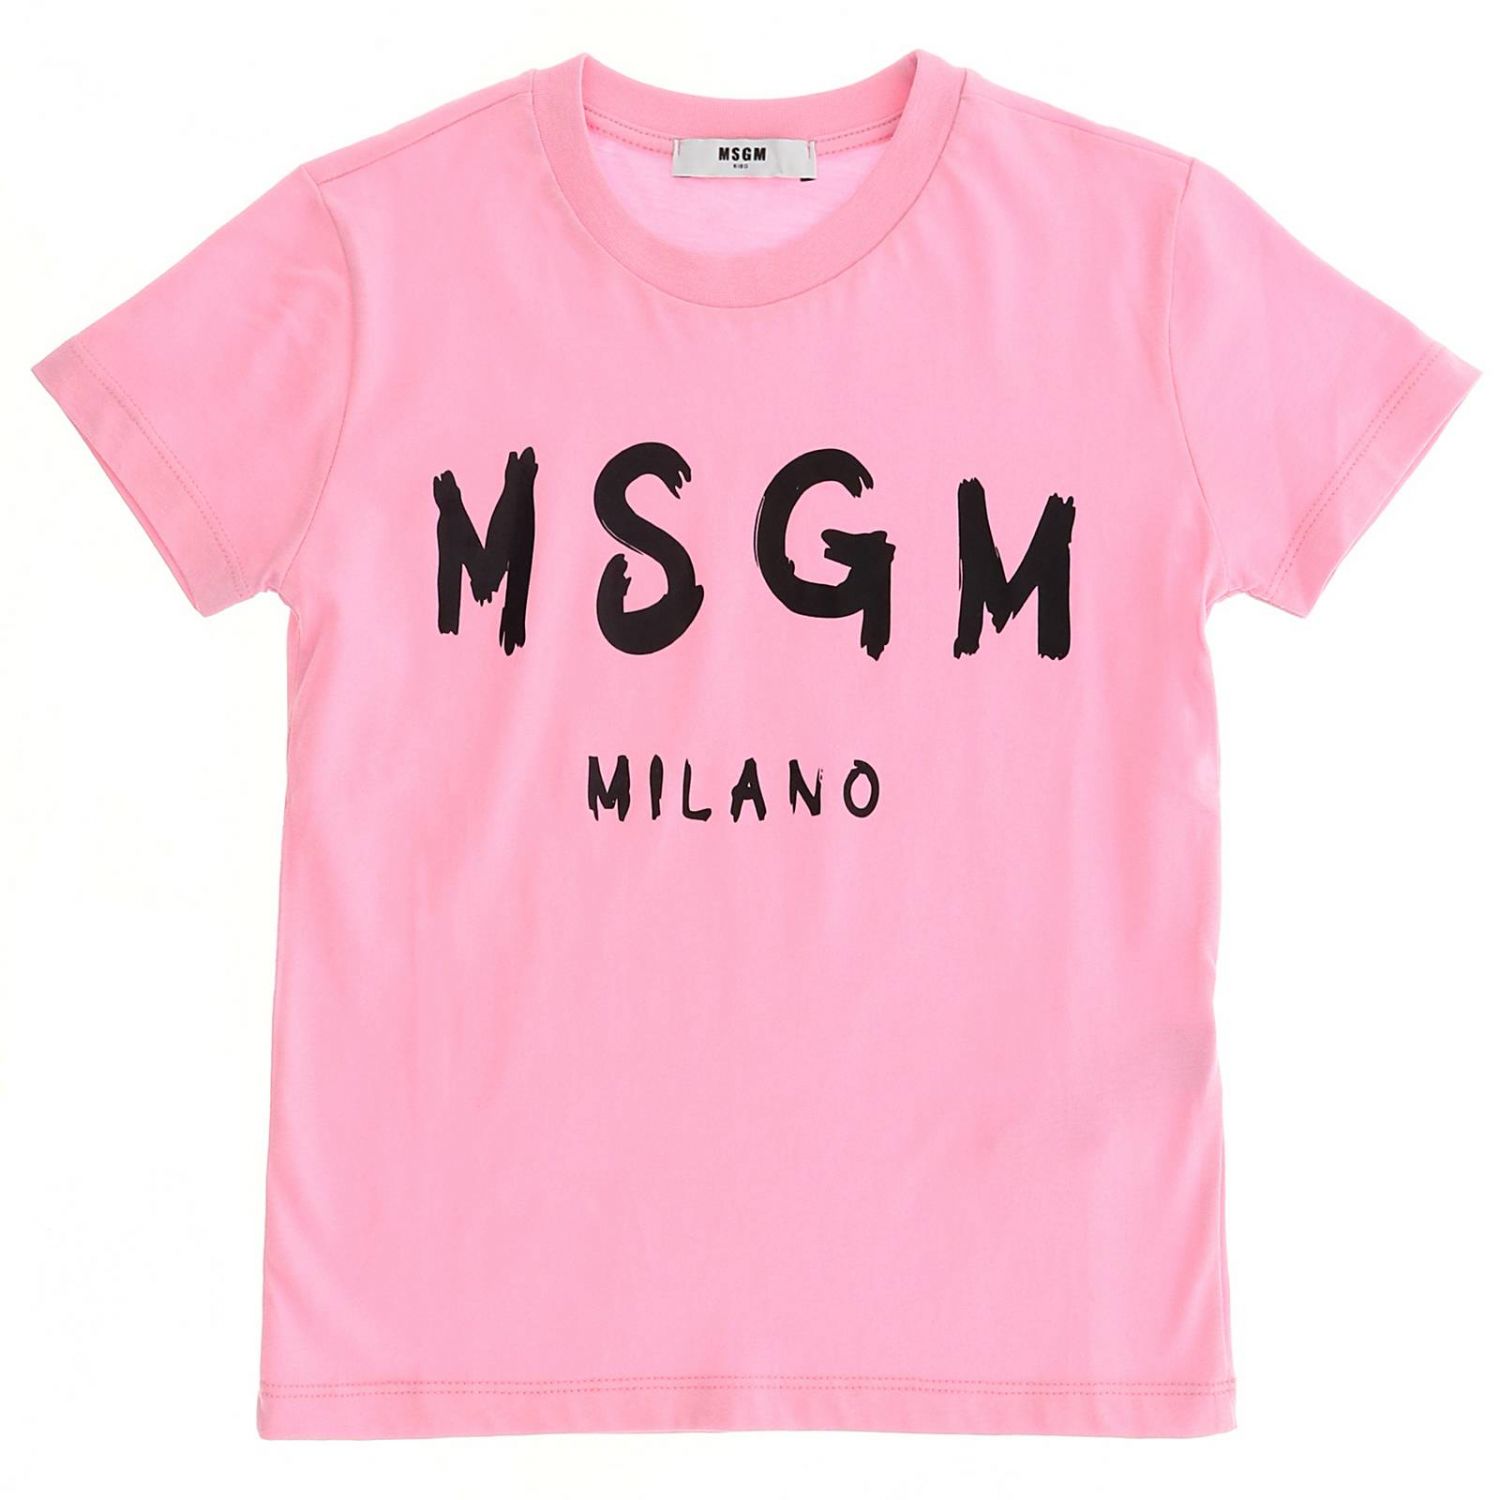 Msgm Kids Outlet: t-shirt for boys - Pink | Msgm Kids t-shirt 020742 ...